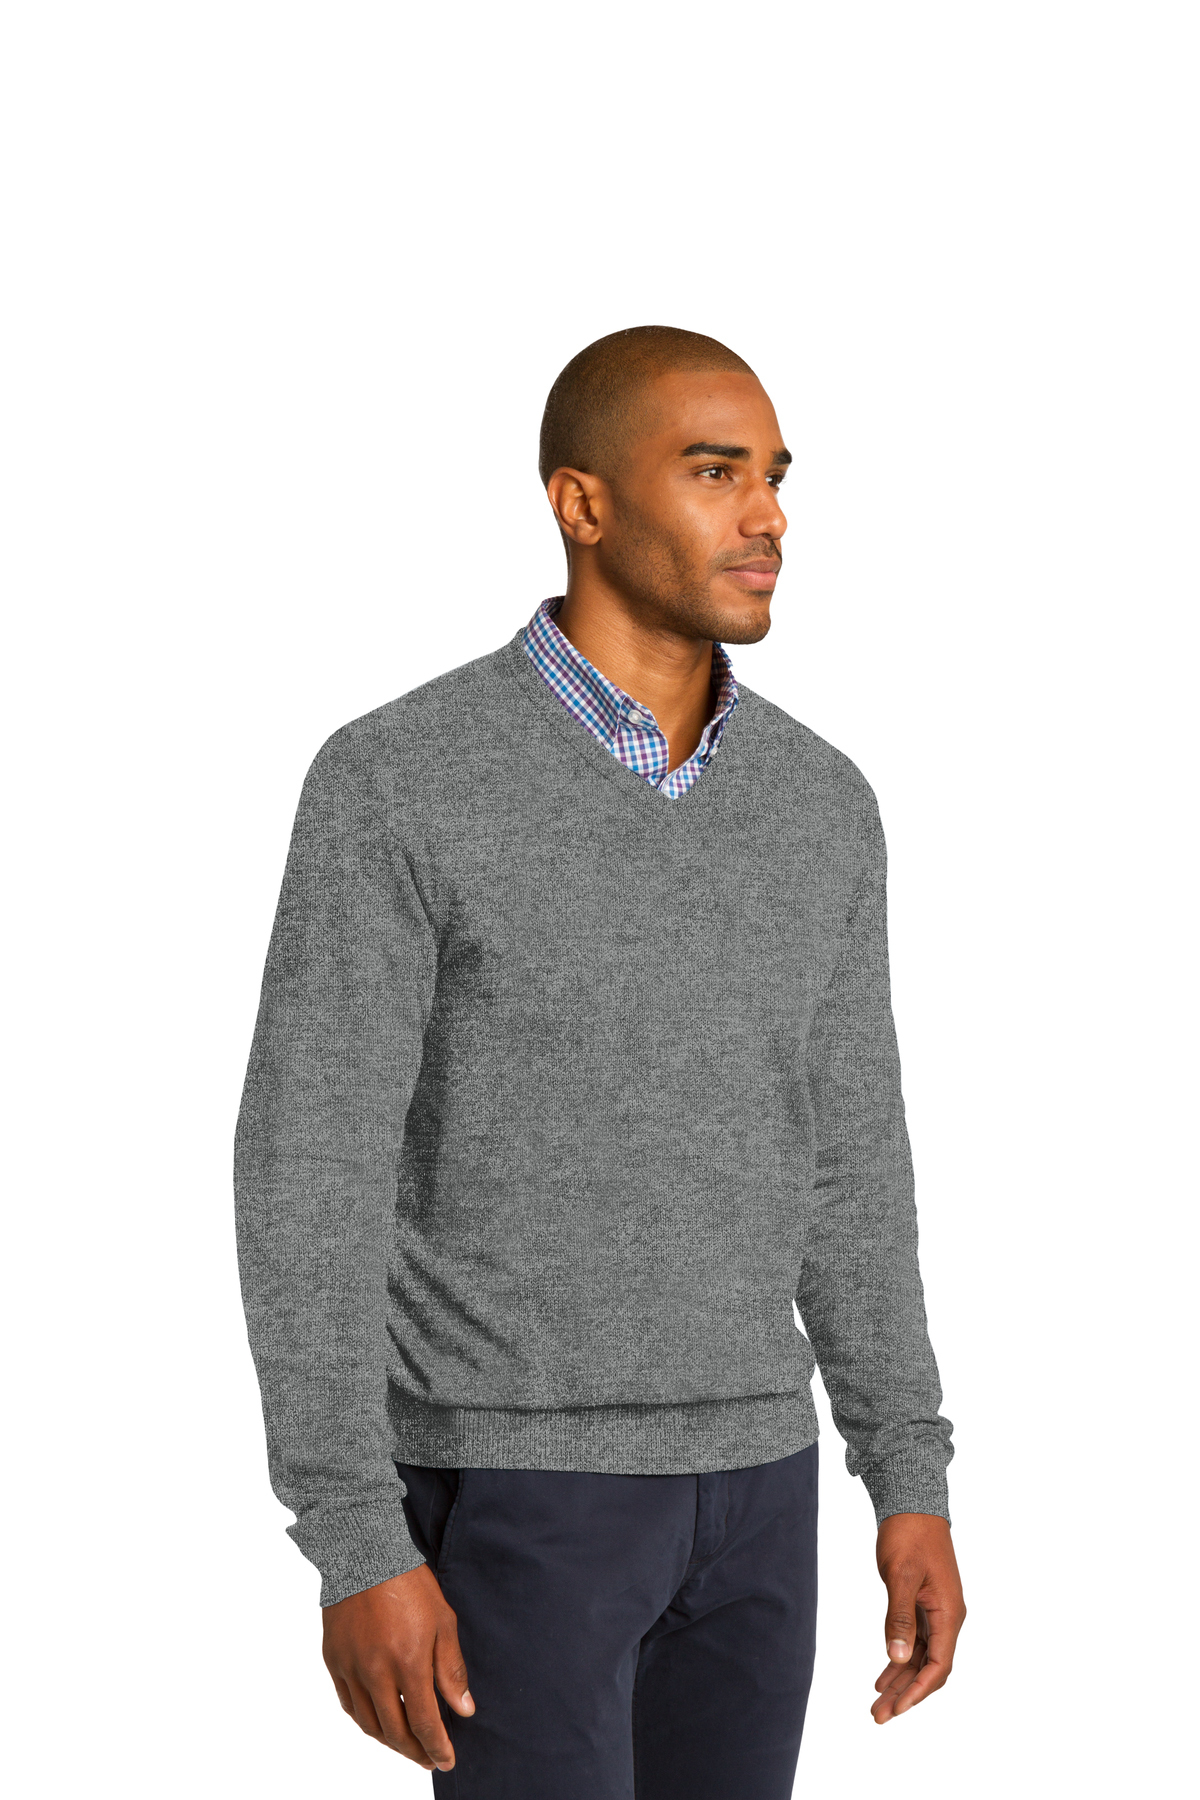 Port Authority V-Neck Sweater | Product | SanMar